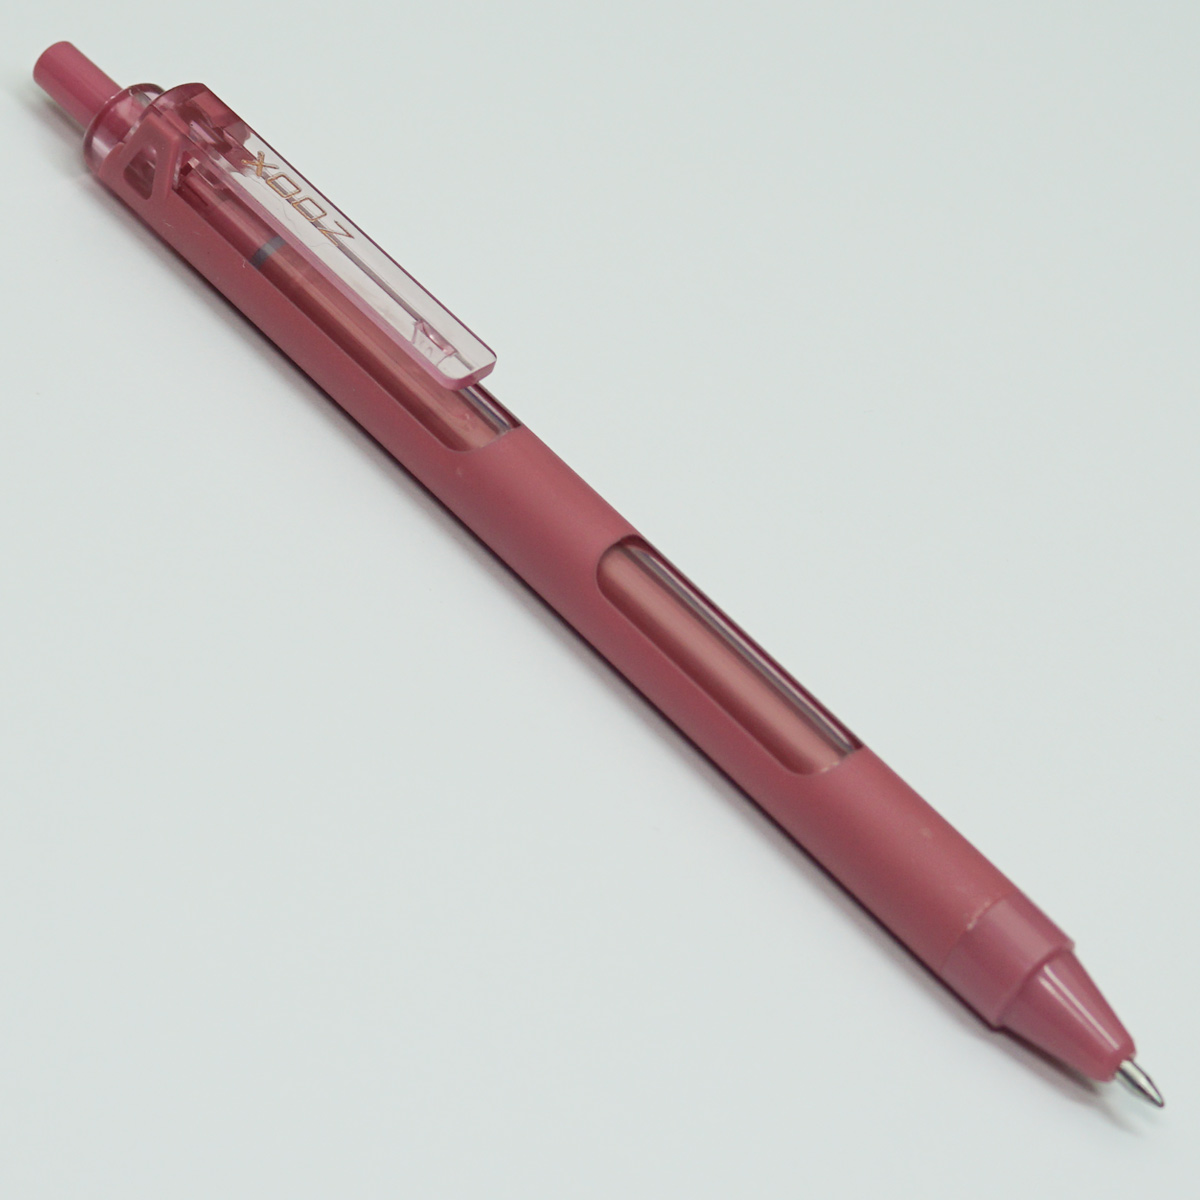 Flair Zoox Plum Color Body With Medium Tip Blue Writing Click Type Roller Ball Pen SKU 22660